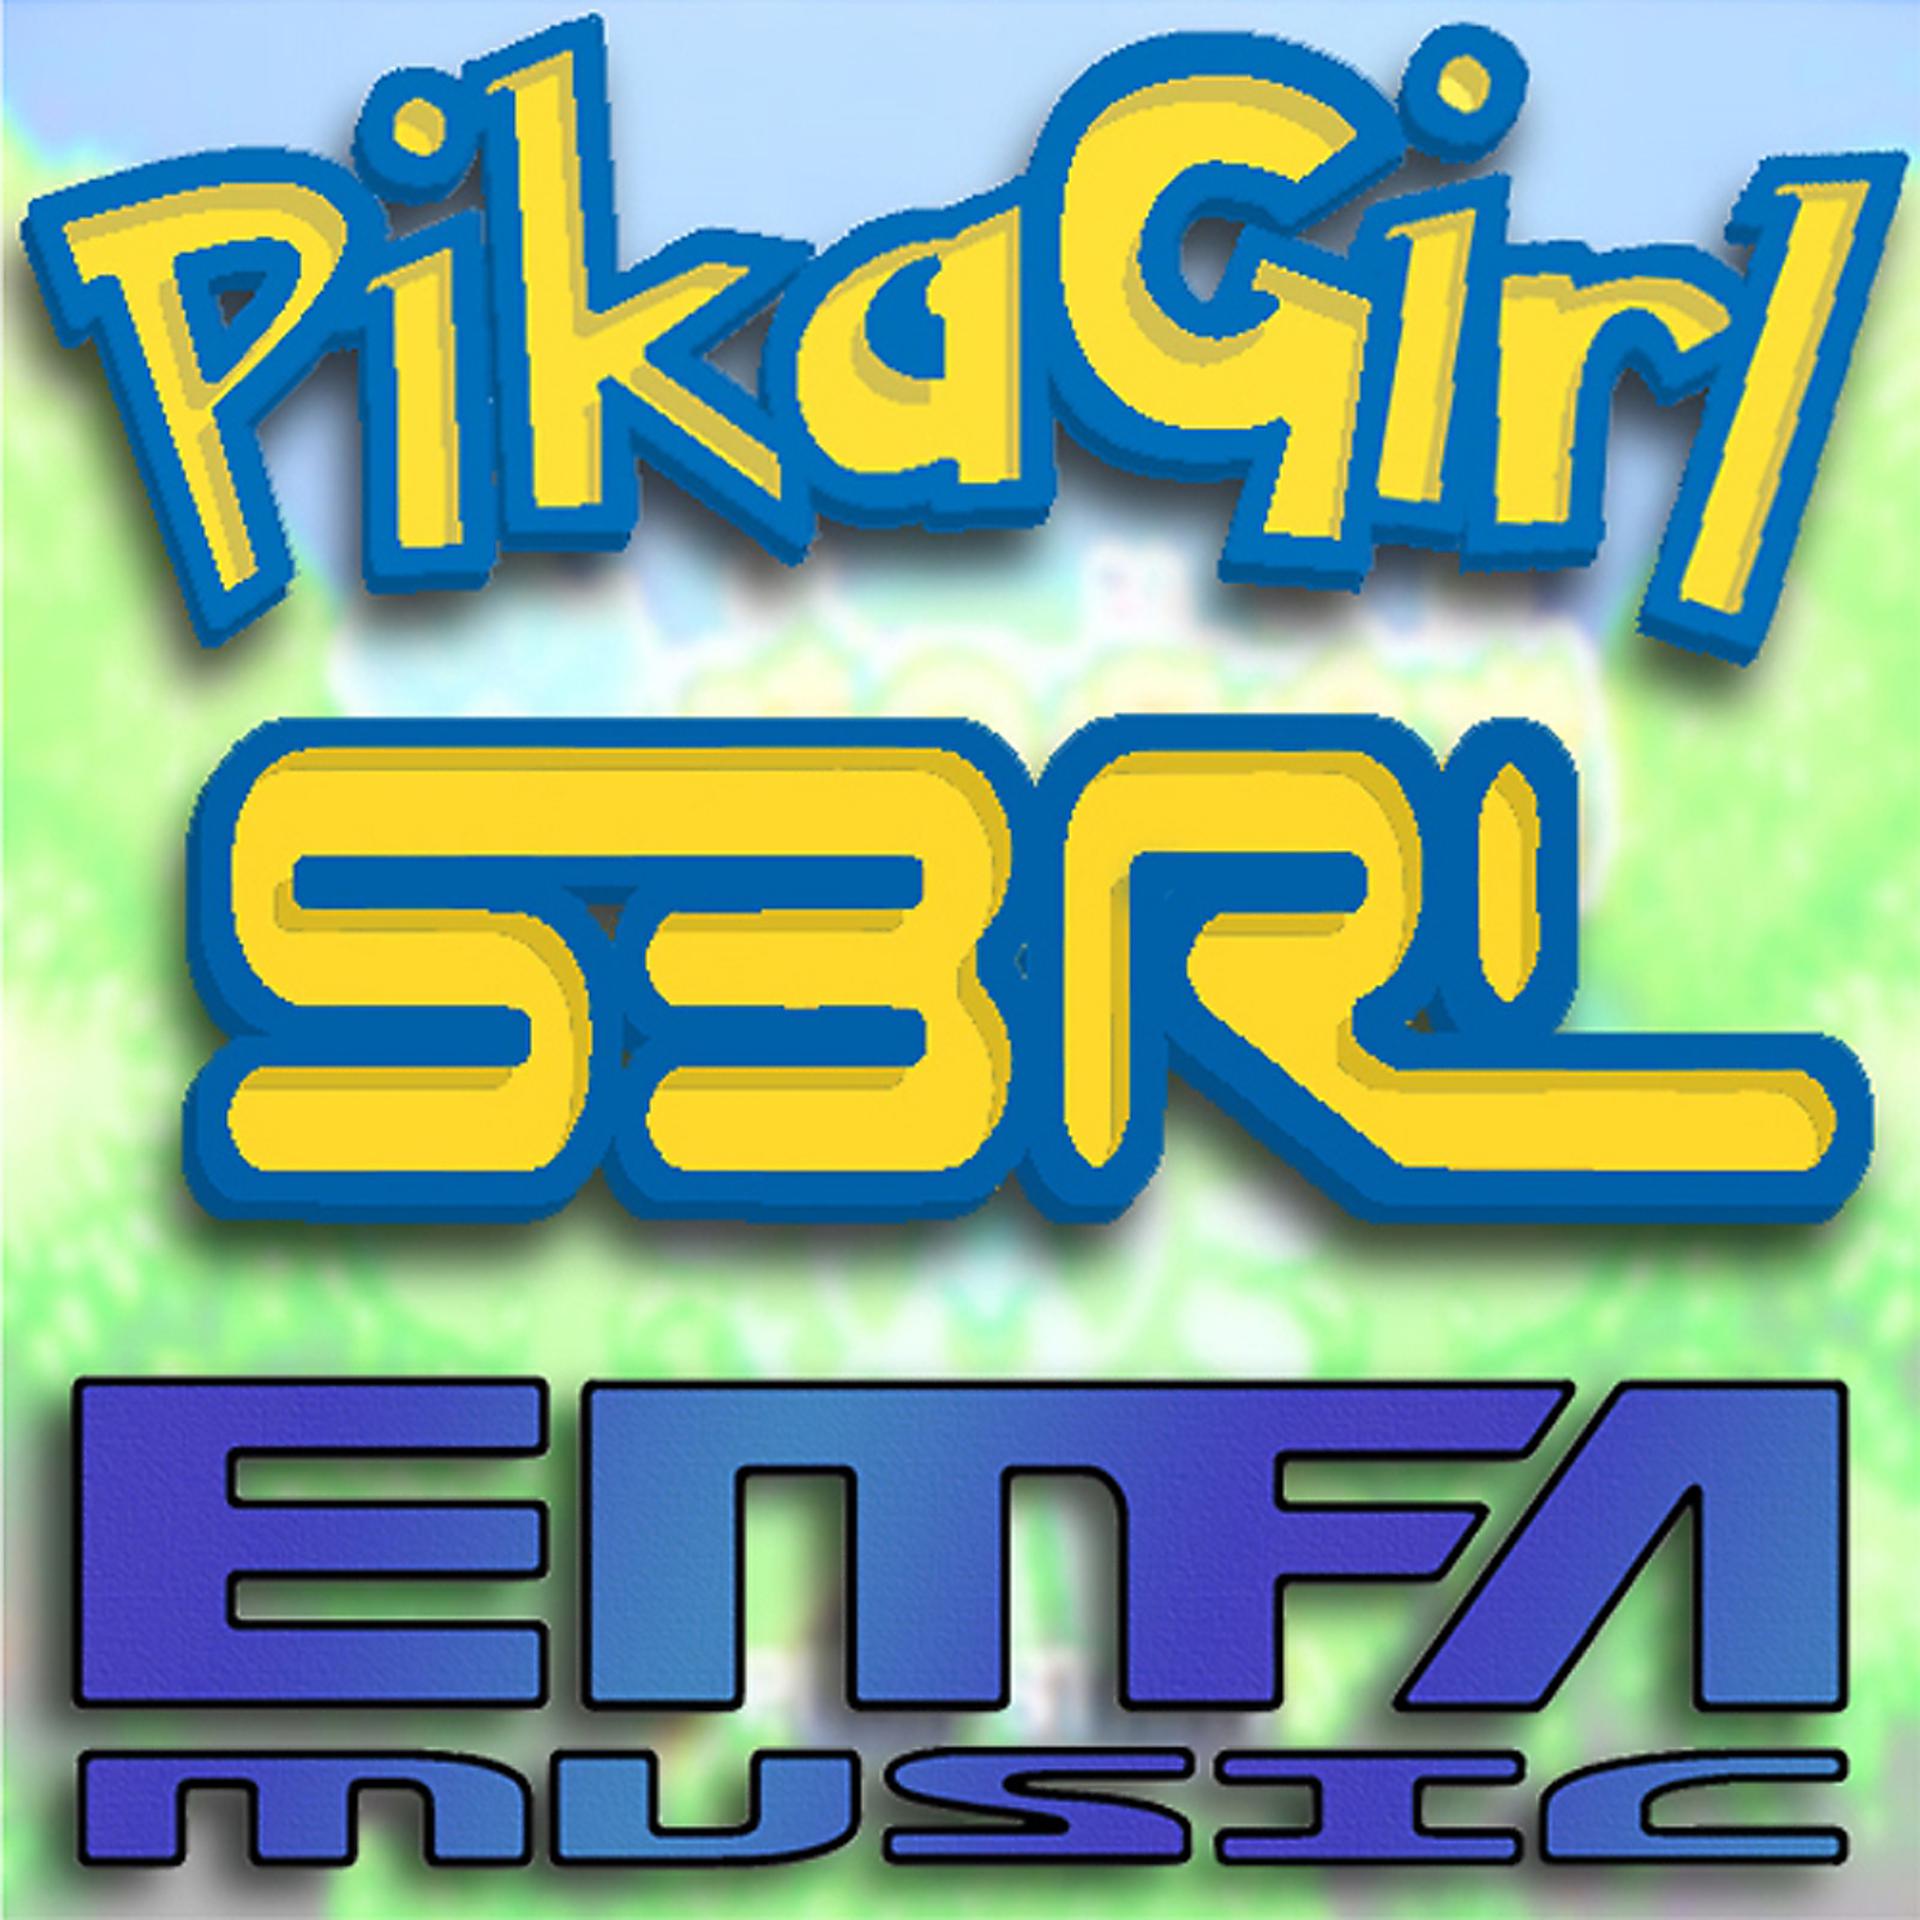 Постер альбома Pika Girl